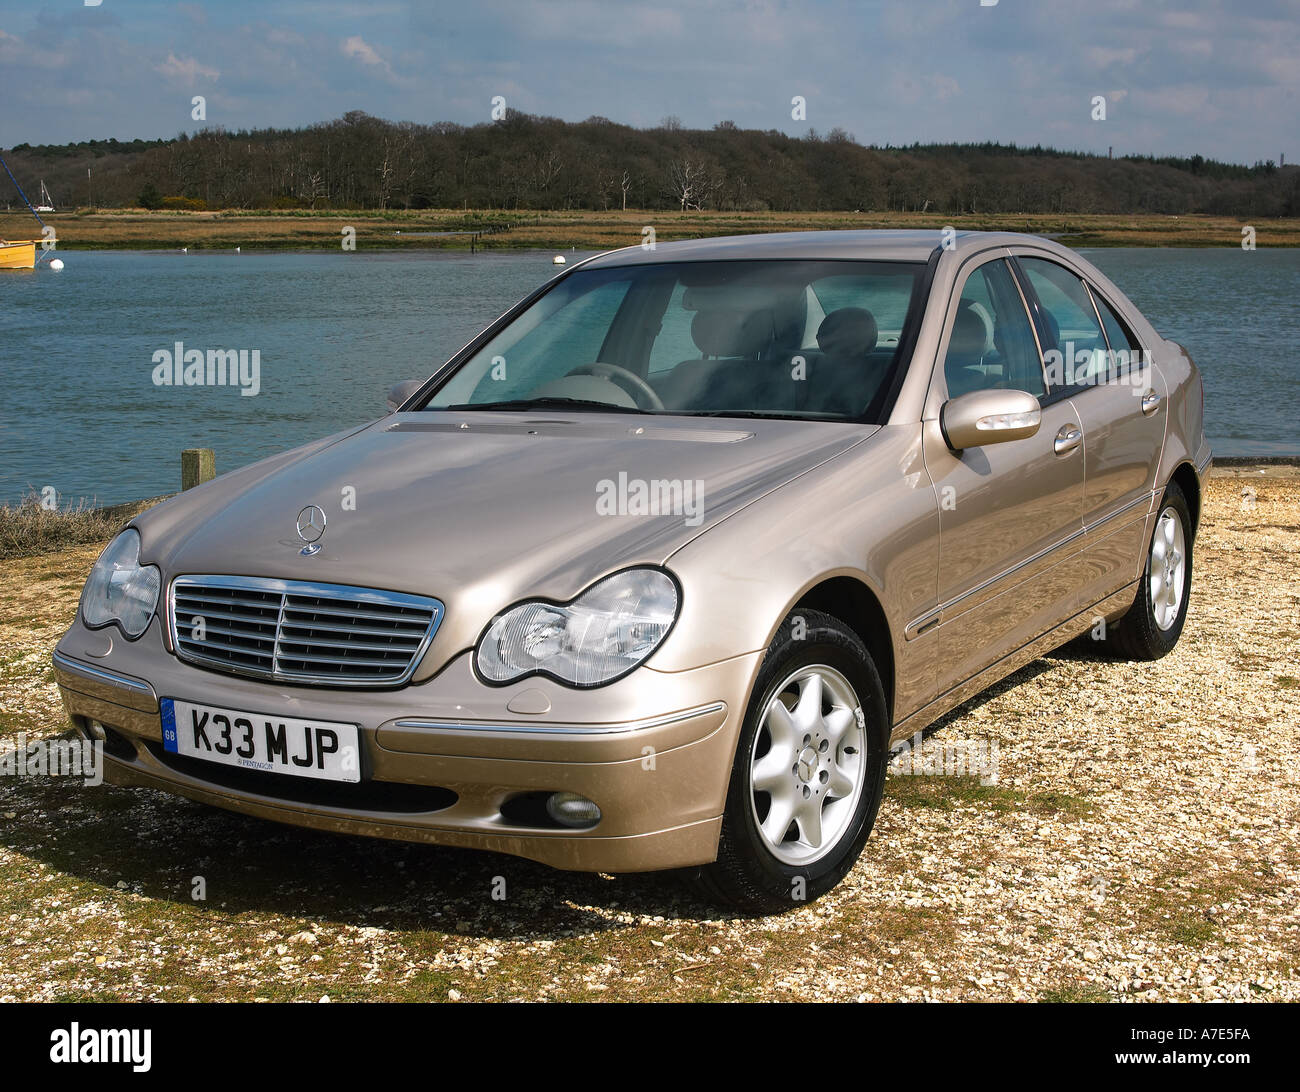 2002 Mercedes Benz C220 cdi Photo Stock - Alamy